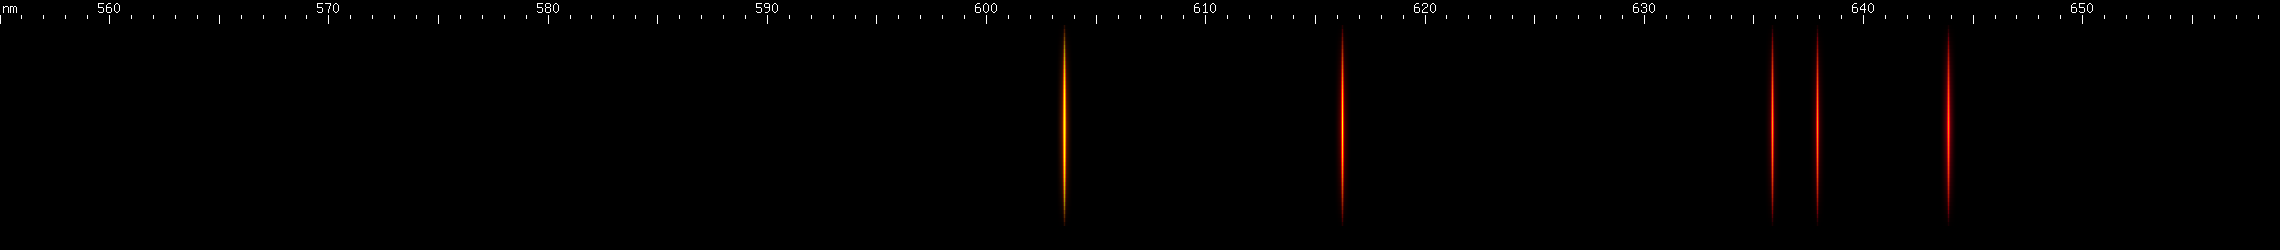 Spectral lines of Protactinium.